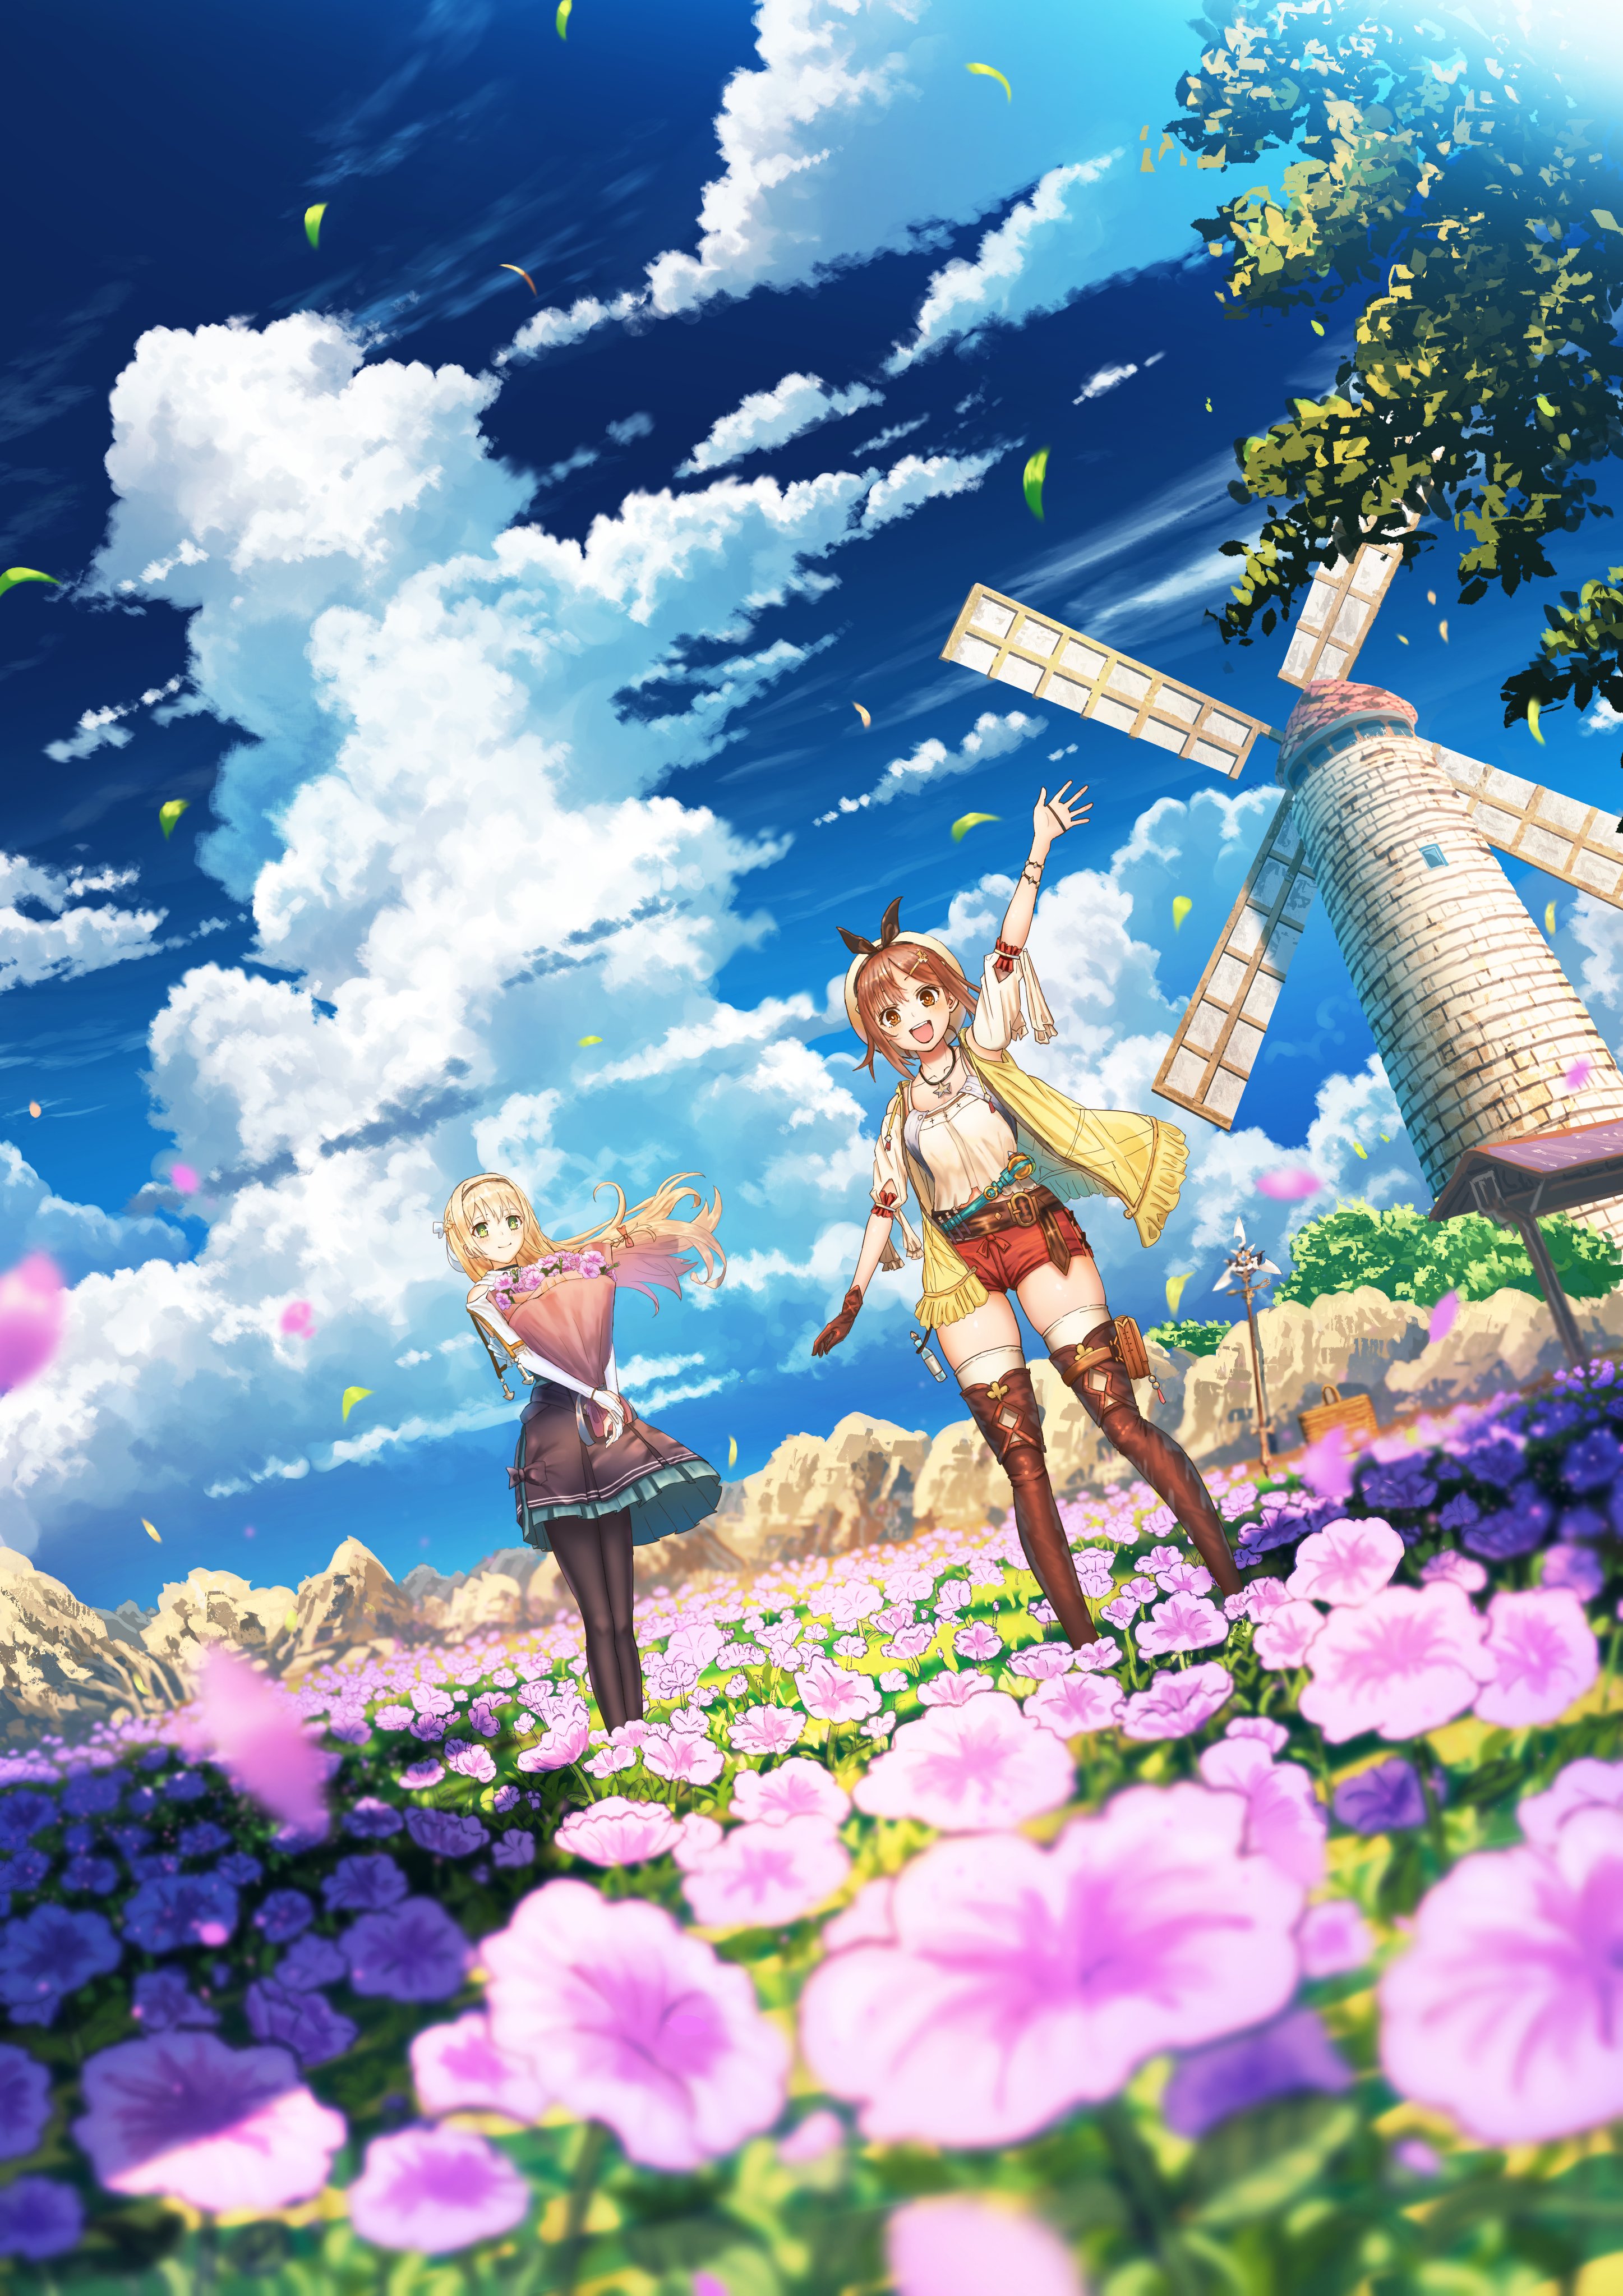 Shuu Illust Atelier Ryza Atelier Anime Girls Klaudia Valentz Flowers Reisalin Stout Two Women Waving 2894x4093